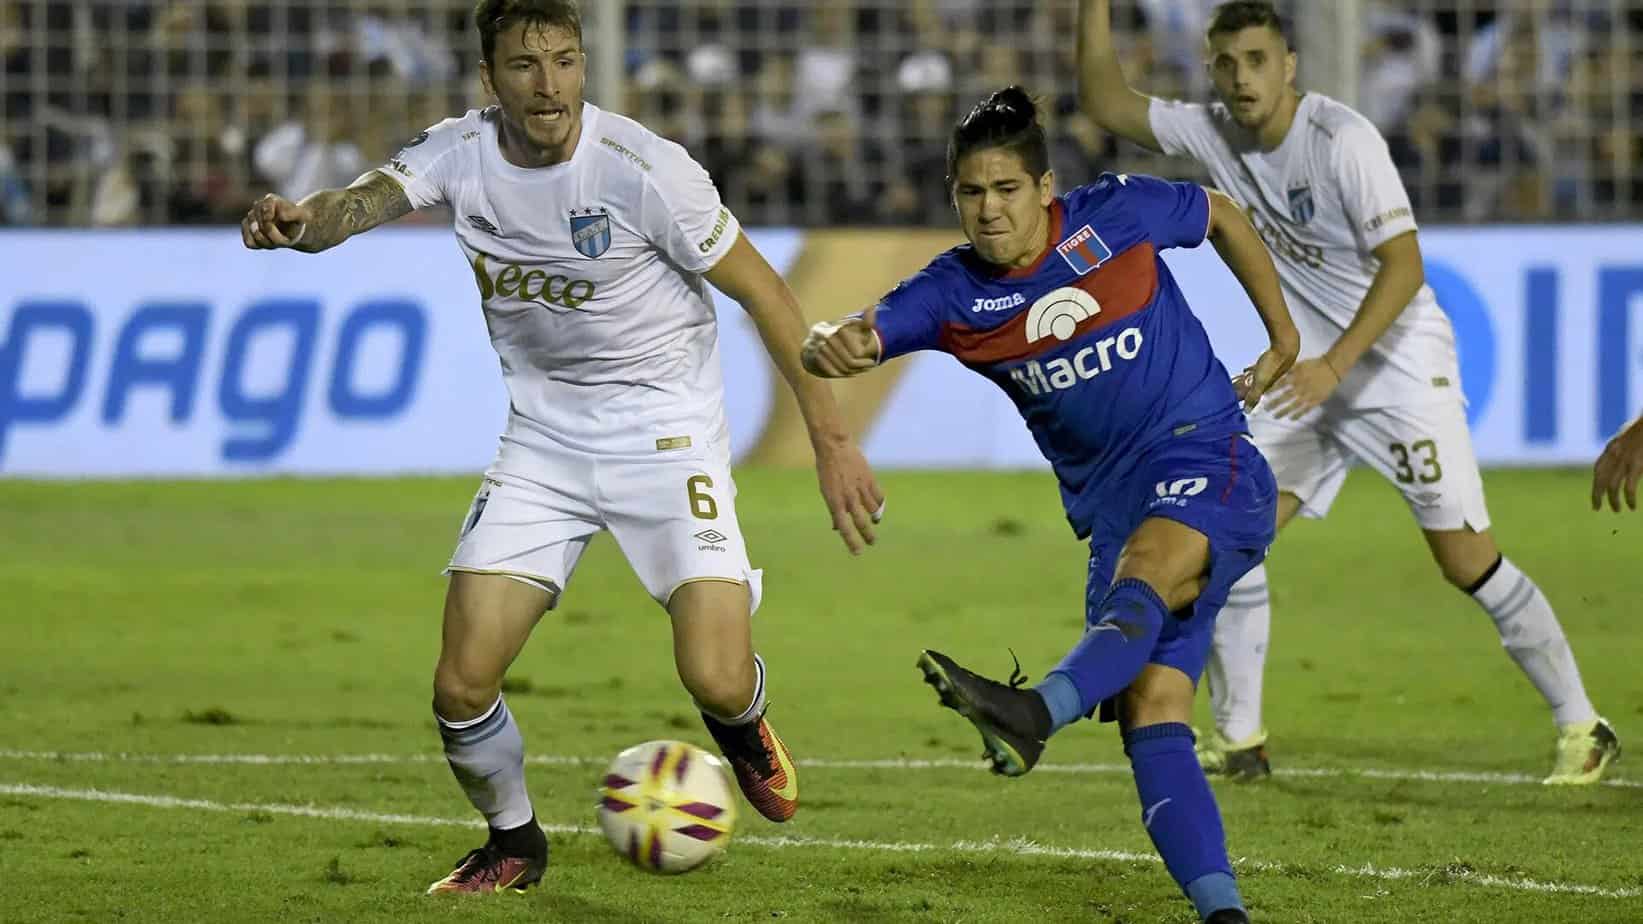 Tigre vs. Atlético Tucumán – Betting Odds and Free Picks